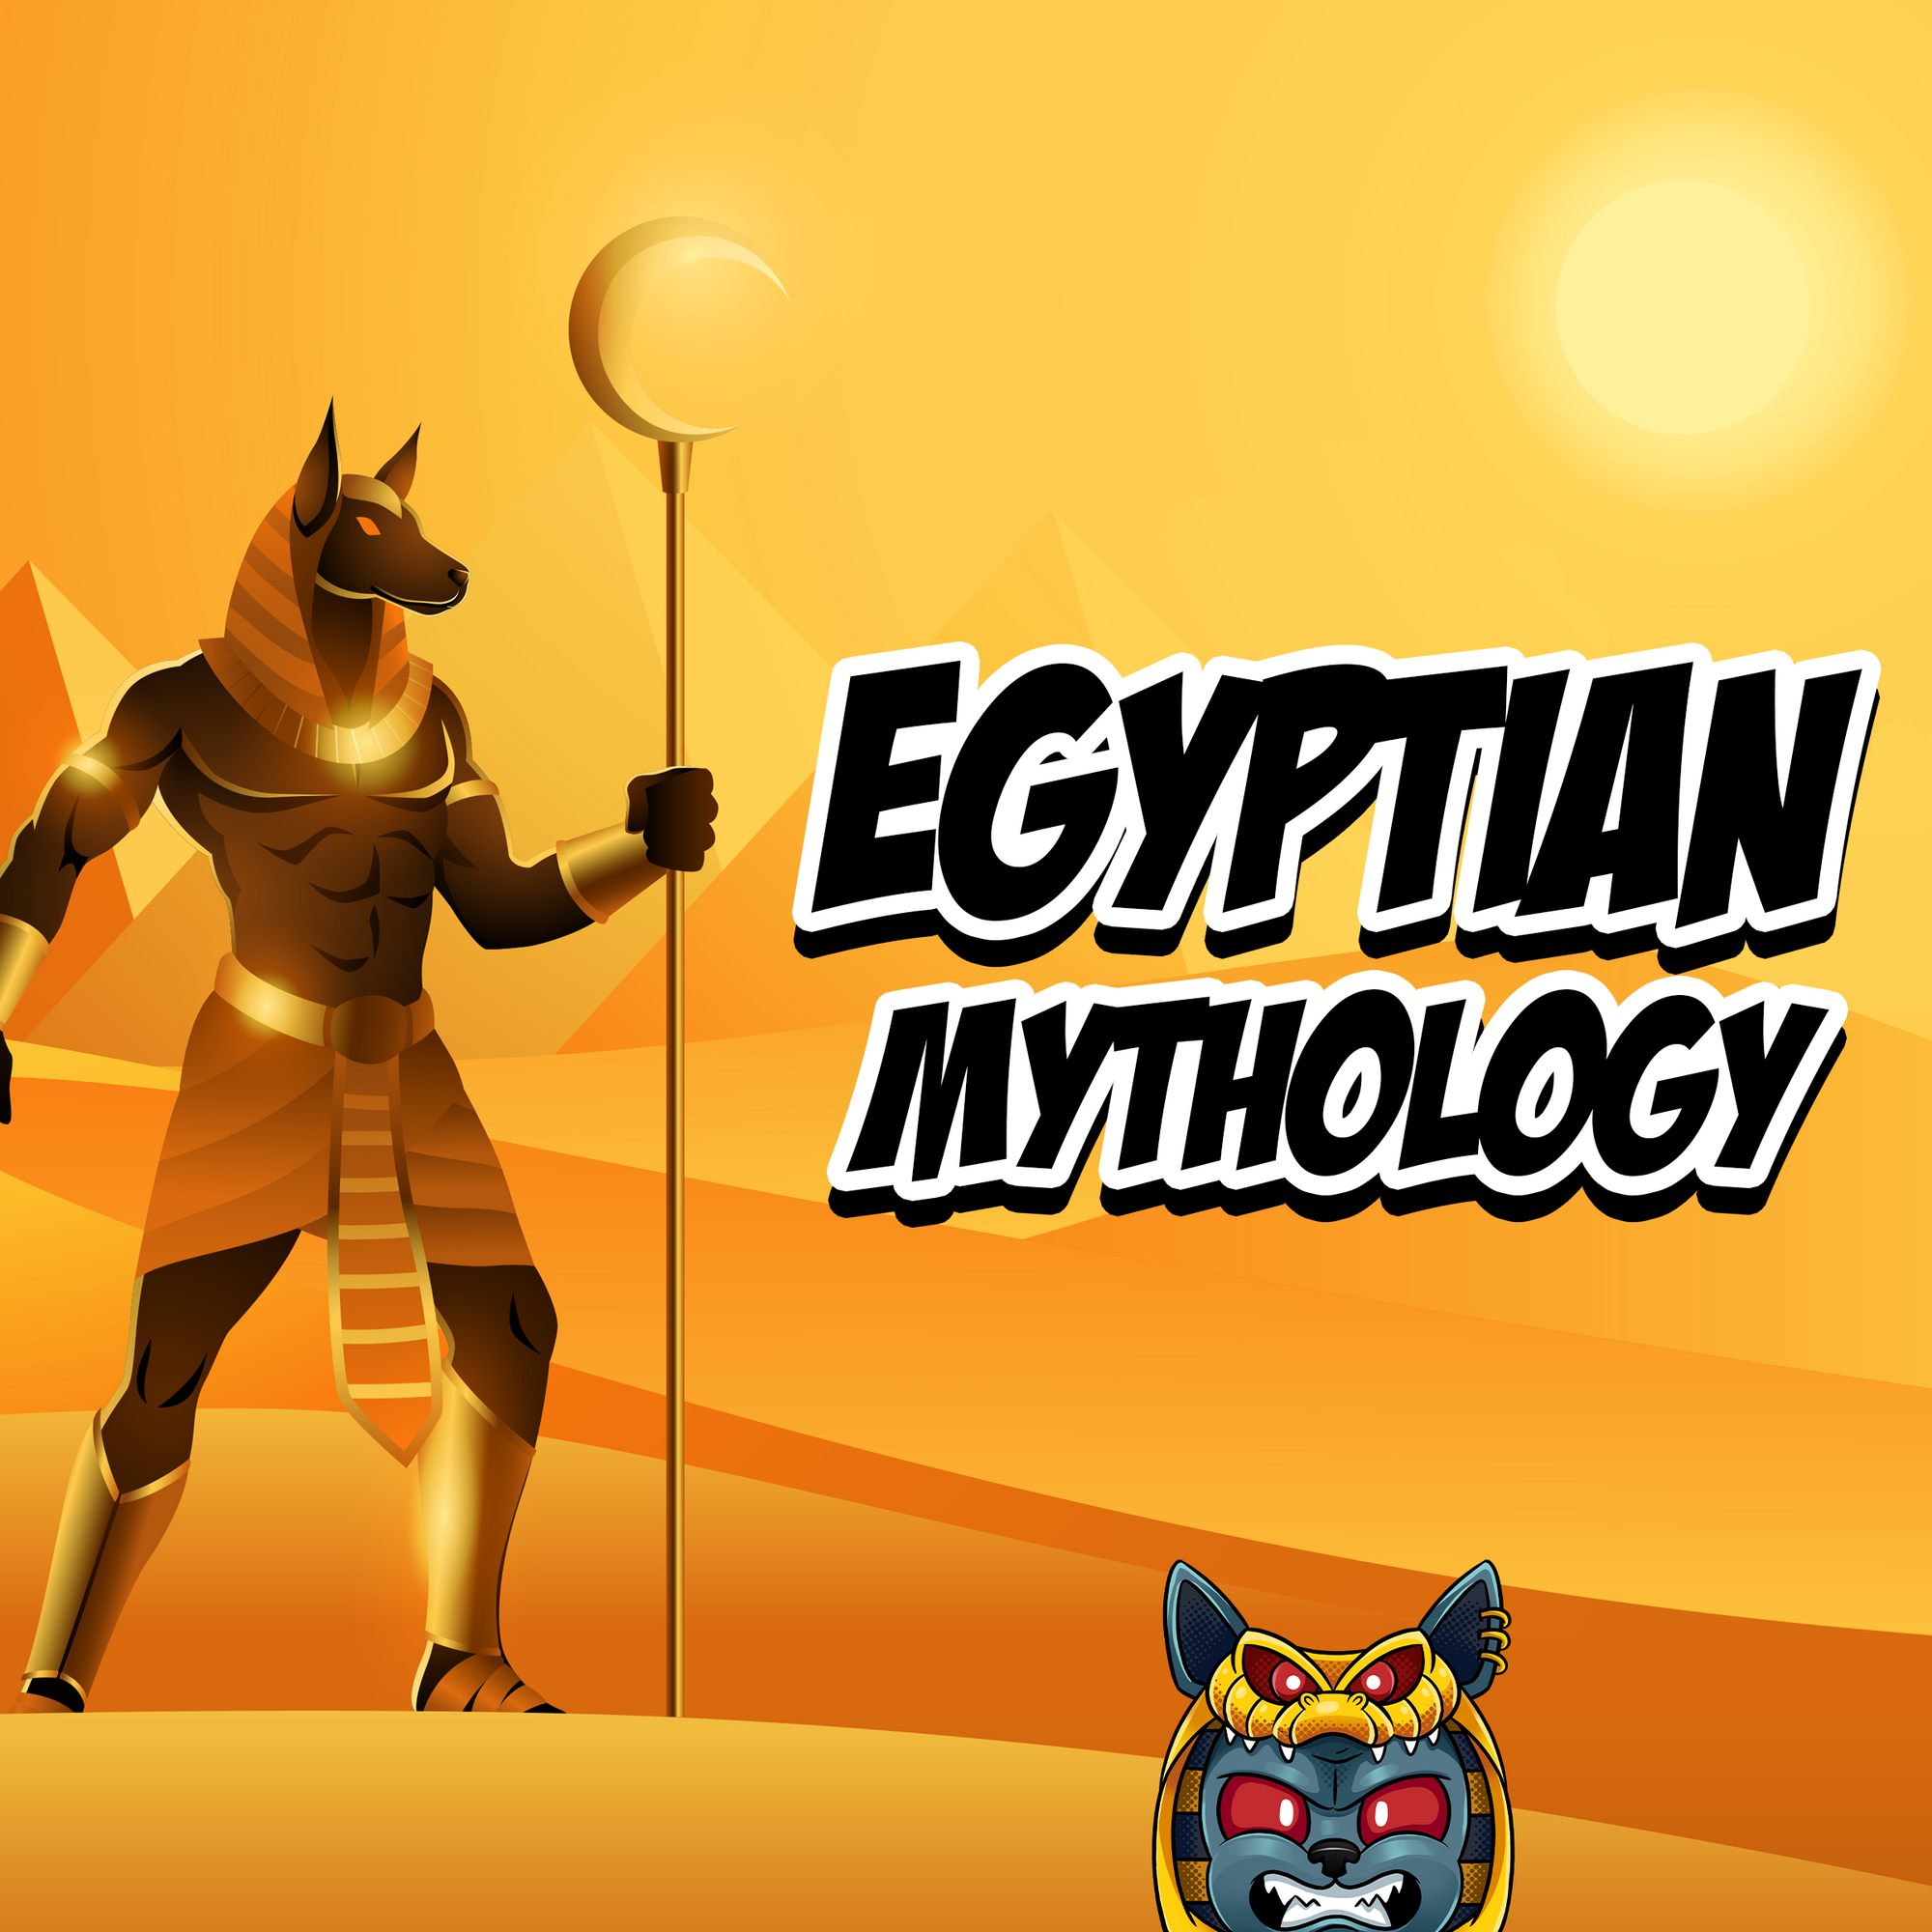 Anubis in Egyptian Mythology, god of the Dead